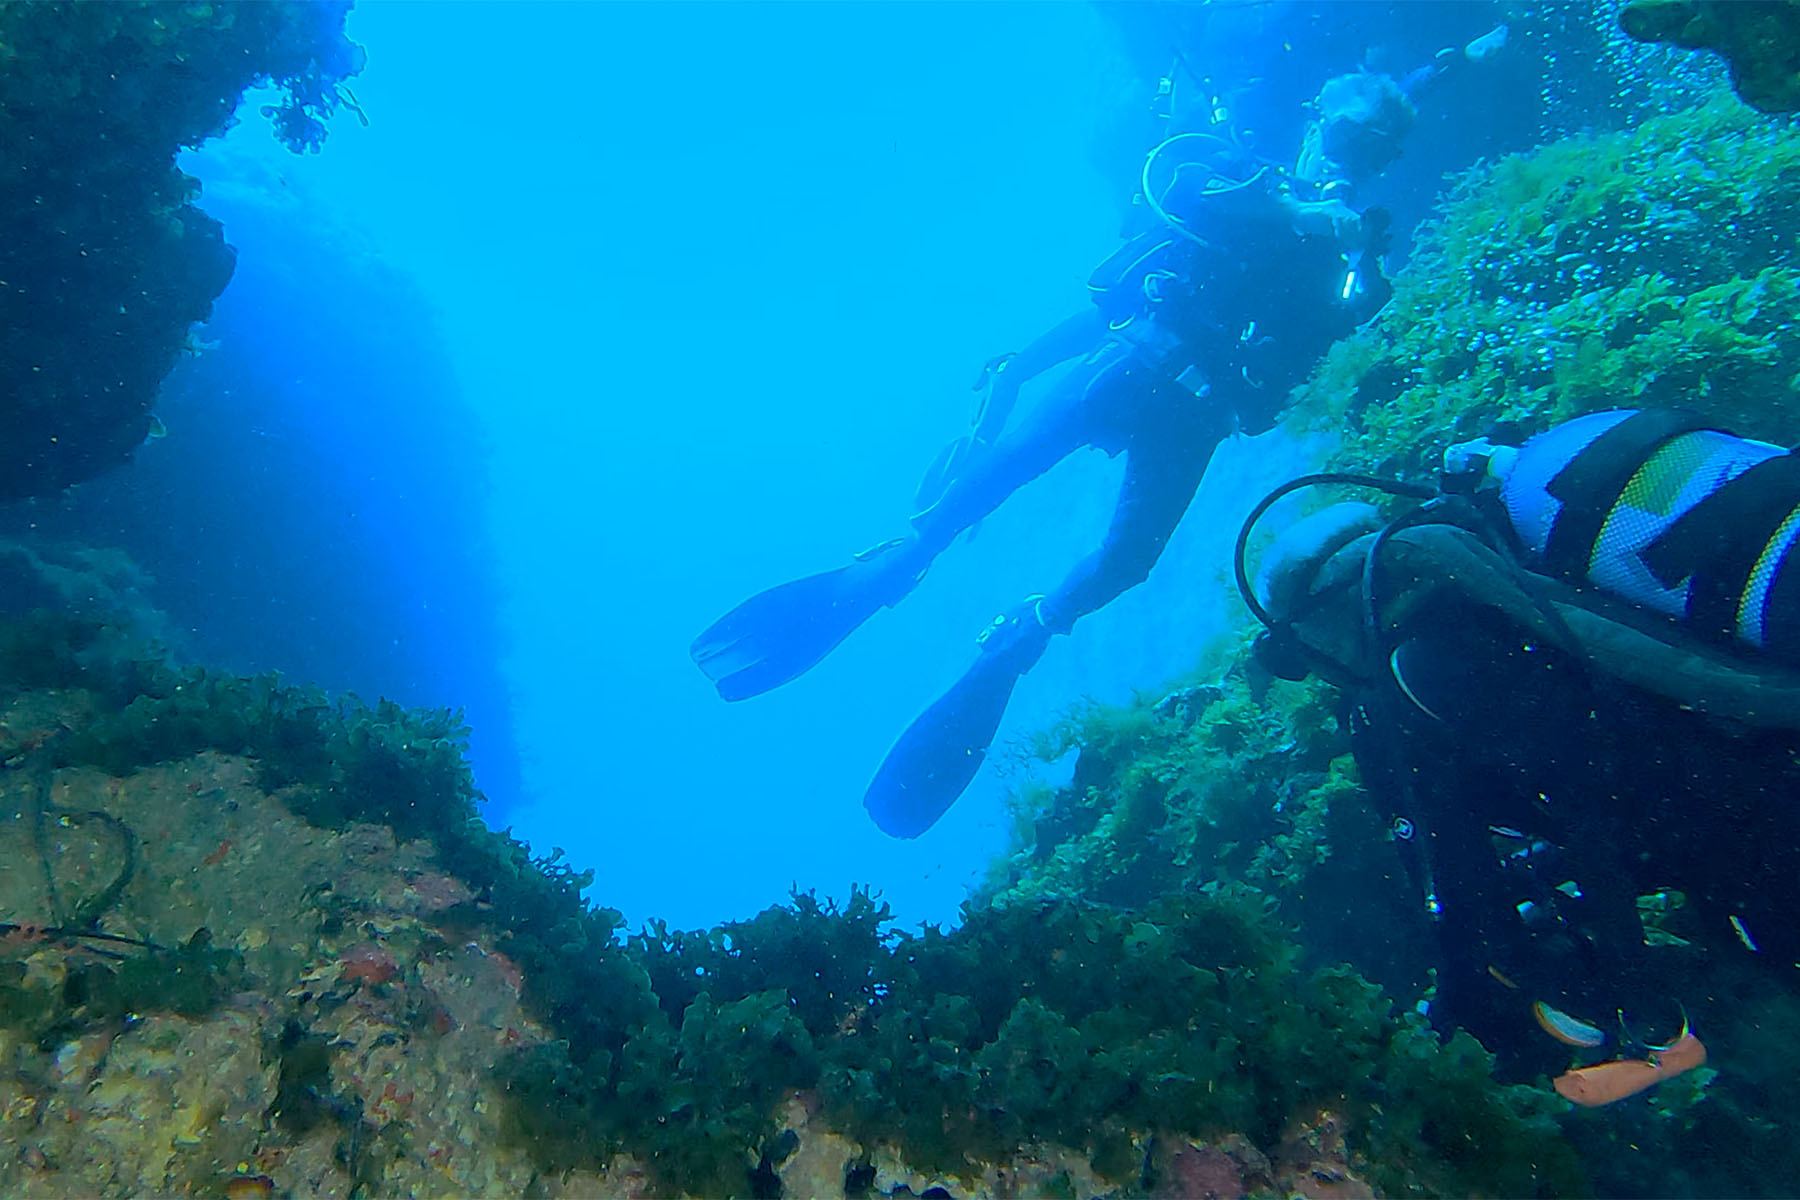 Diver at Lantern Point [Yvan Rouxel]